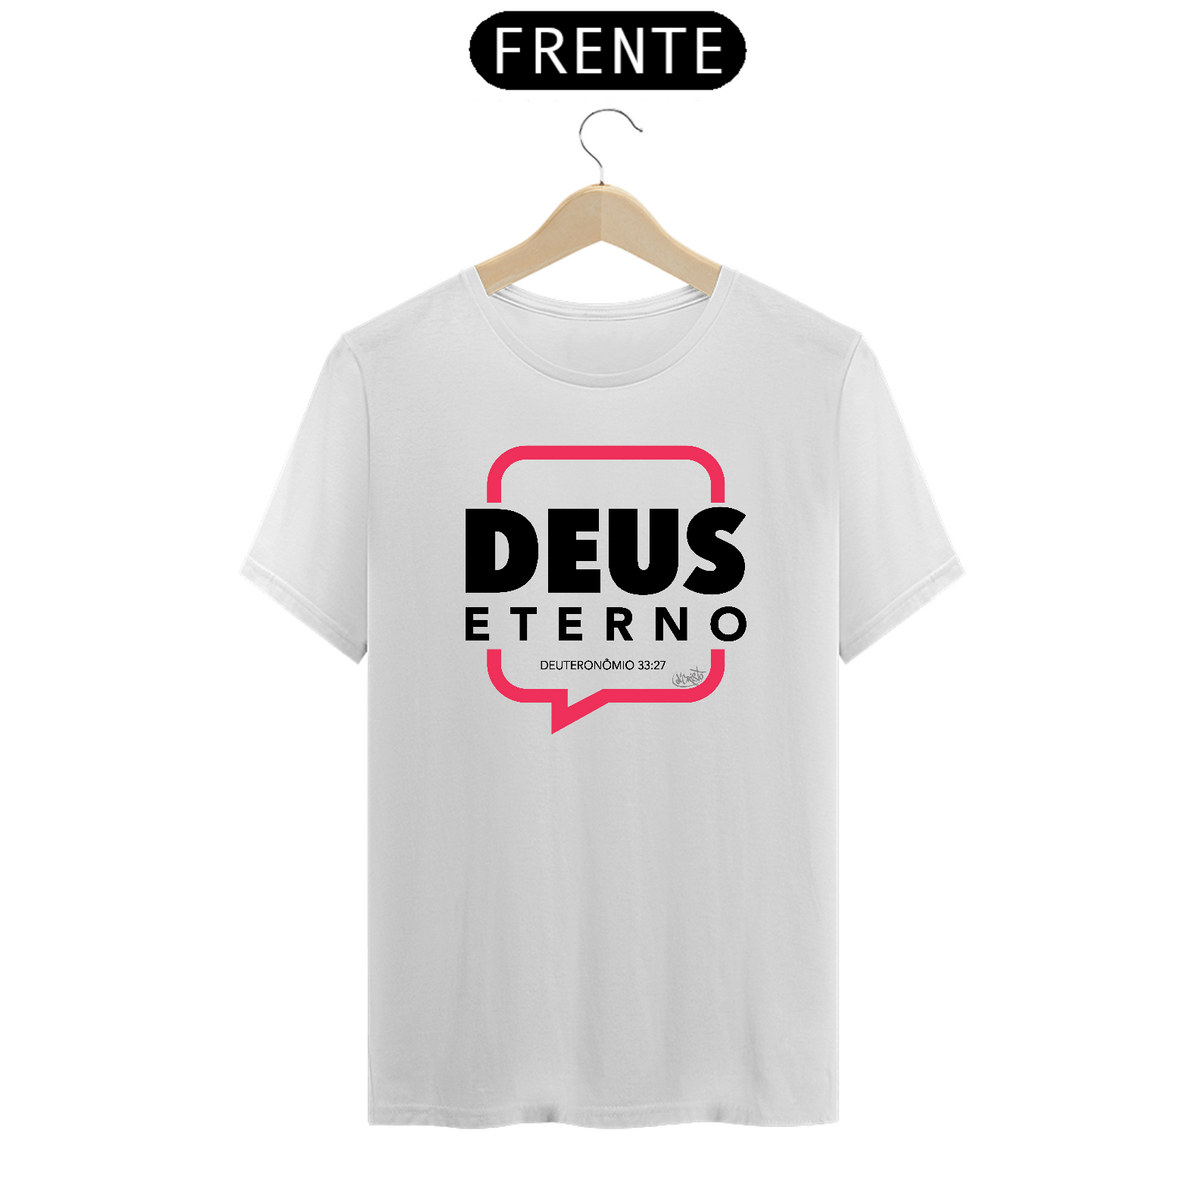 Nome do produto: Camiseta Deus Eterno (cores claras)